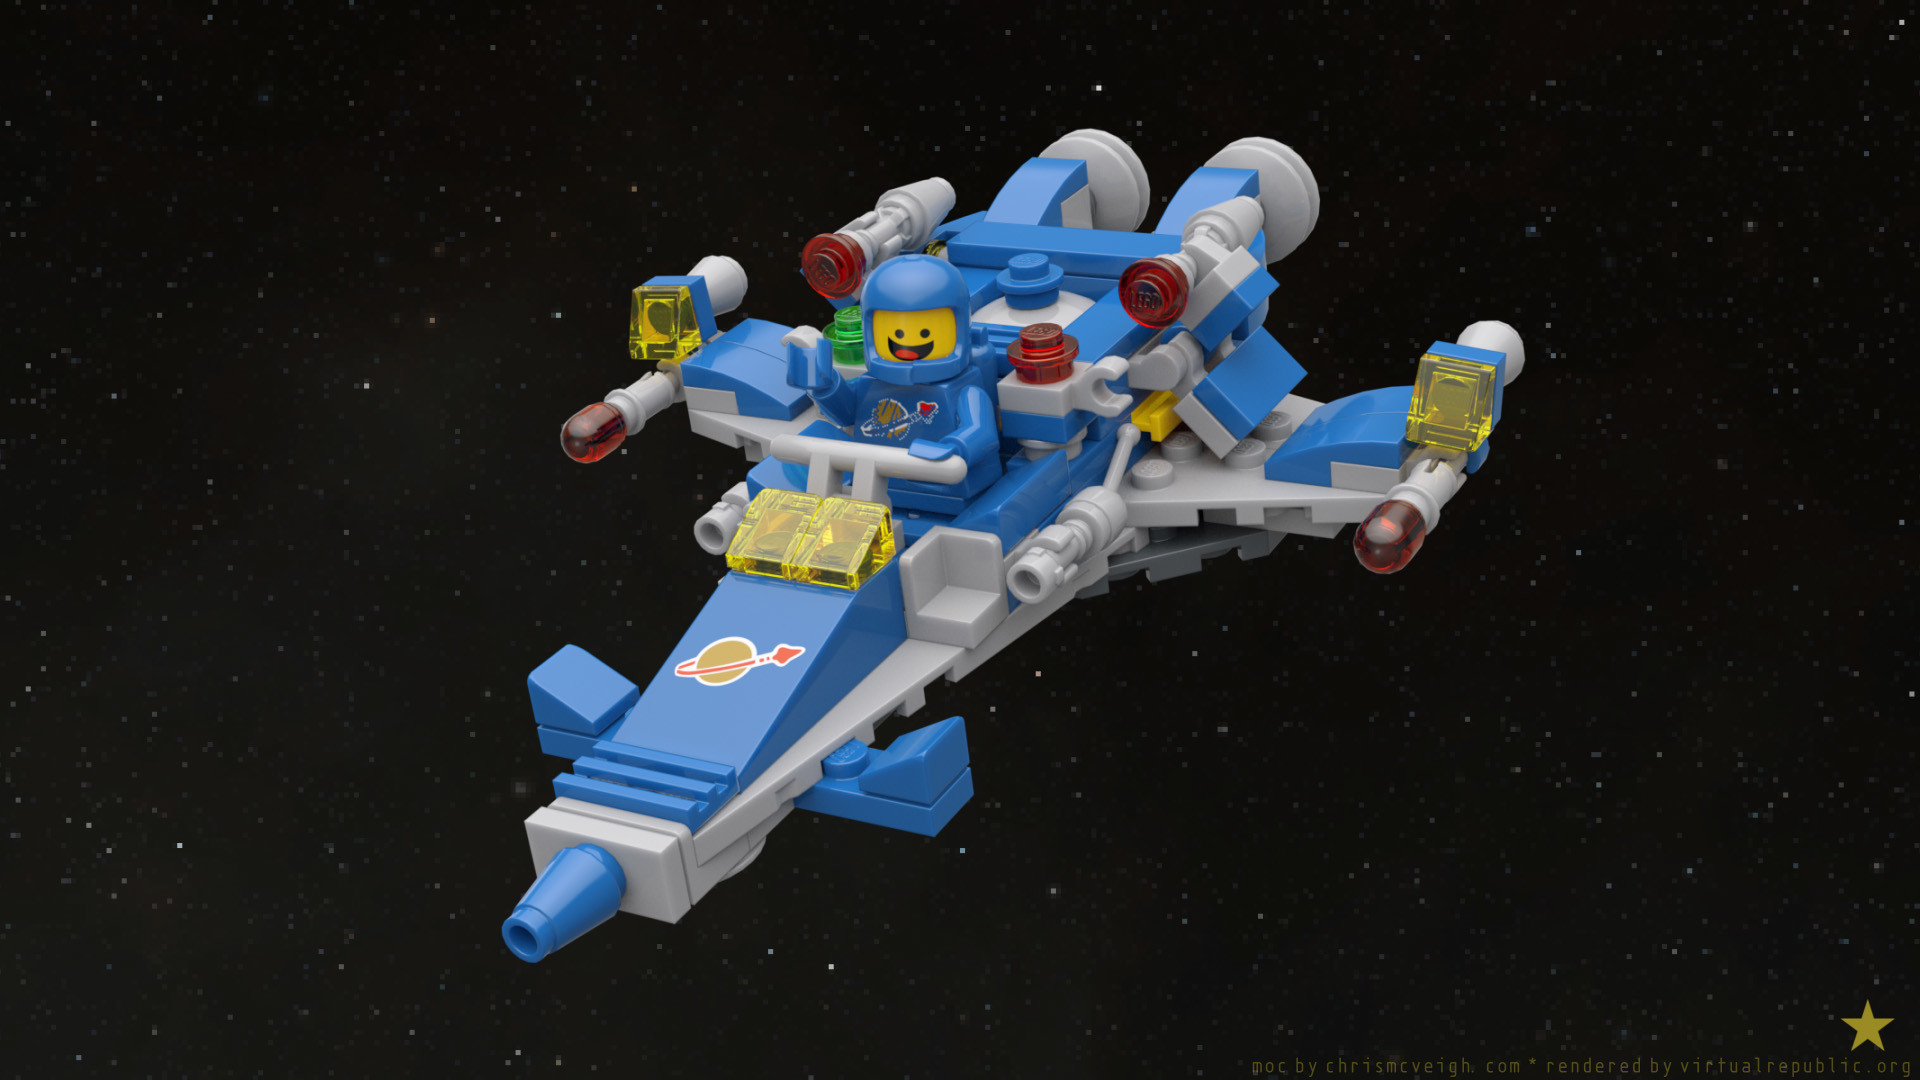 ArtStation - LEGO® Benny's Mini Spaceship by Chris McVeigh